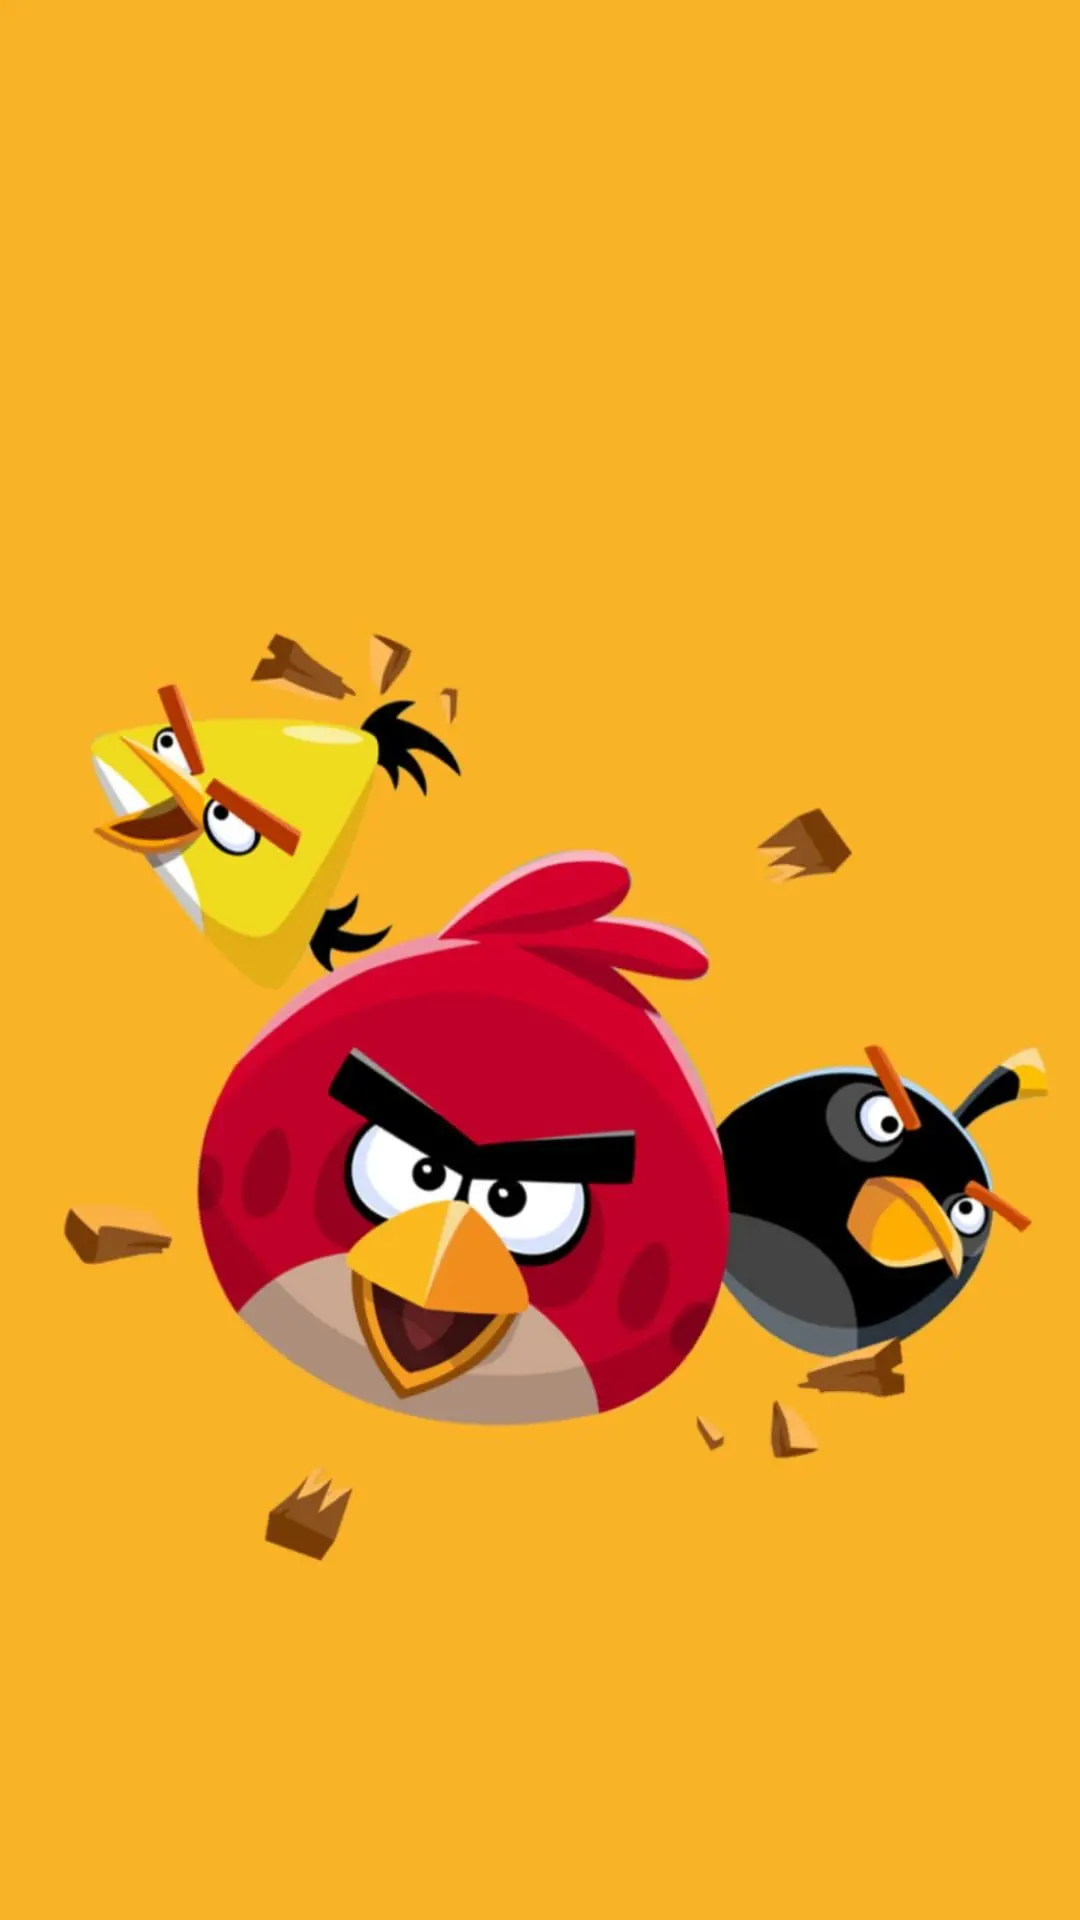 Wallpaper Ponsel Angry Birds - Wallpaper Gua